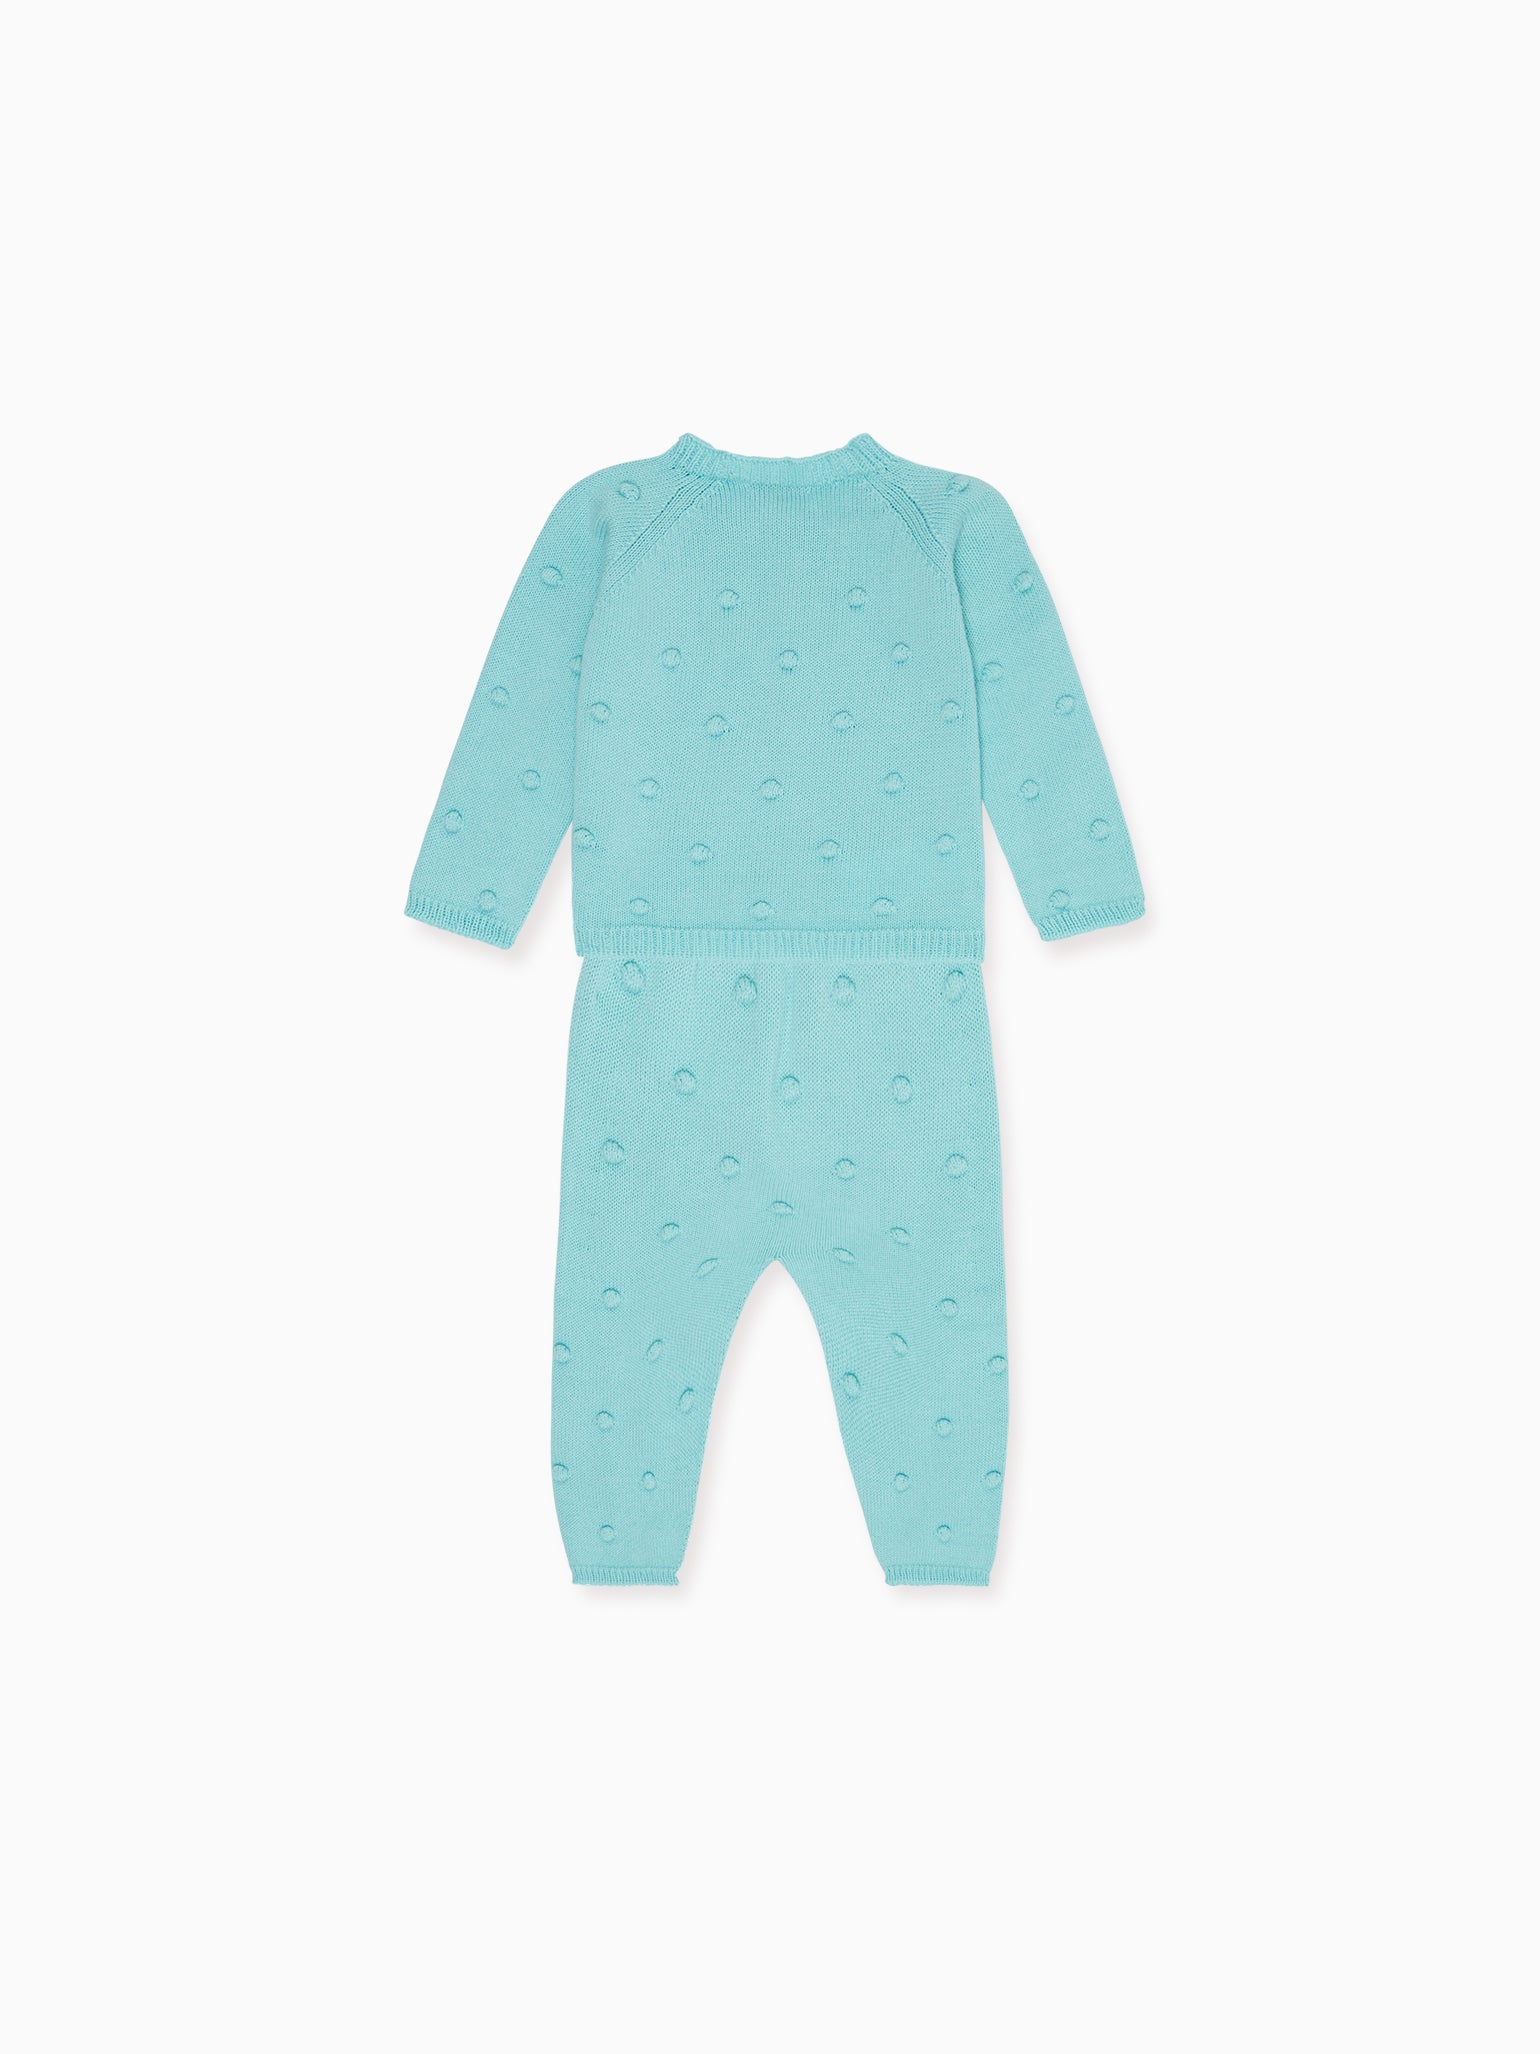 Aqua Ramas Cotton Baby Knitted Gift Box Set